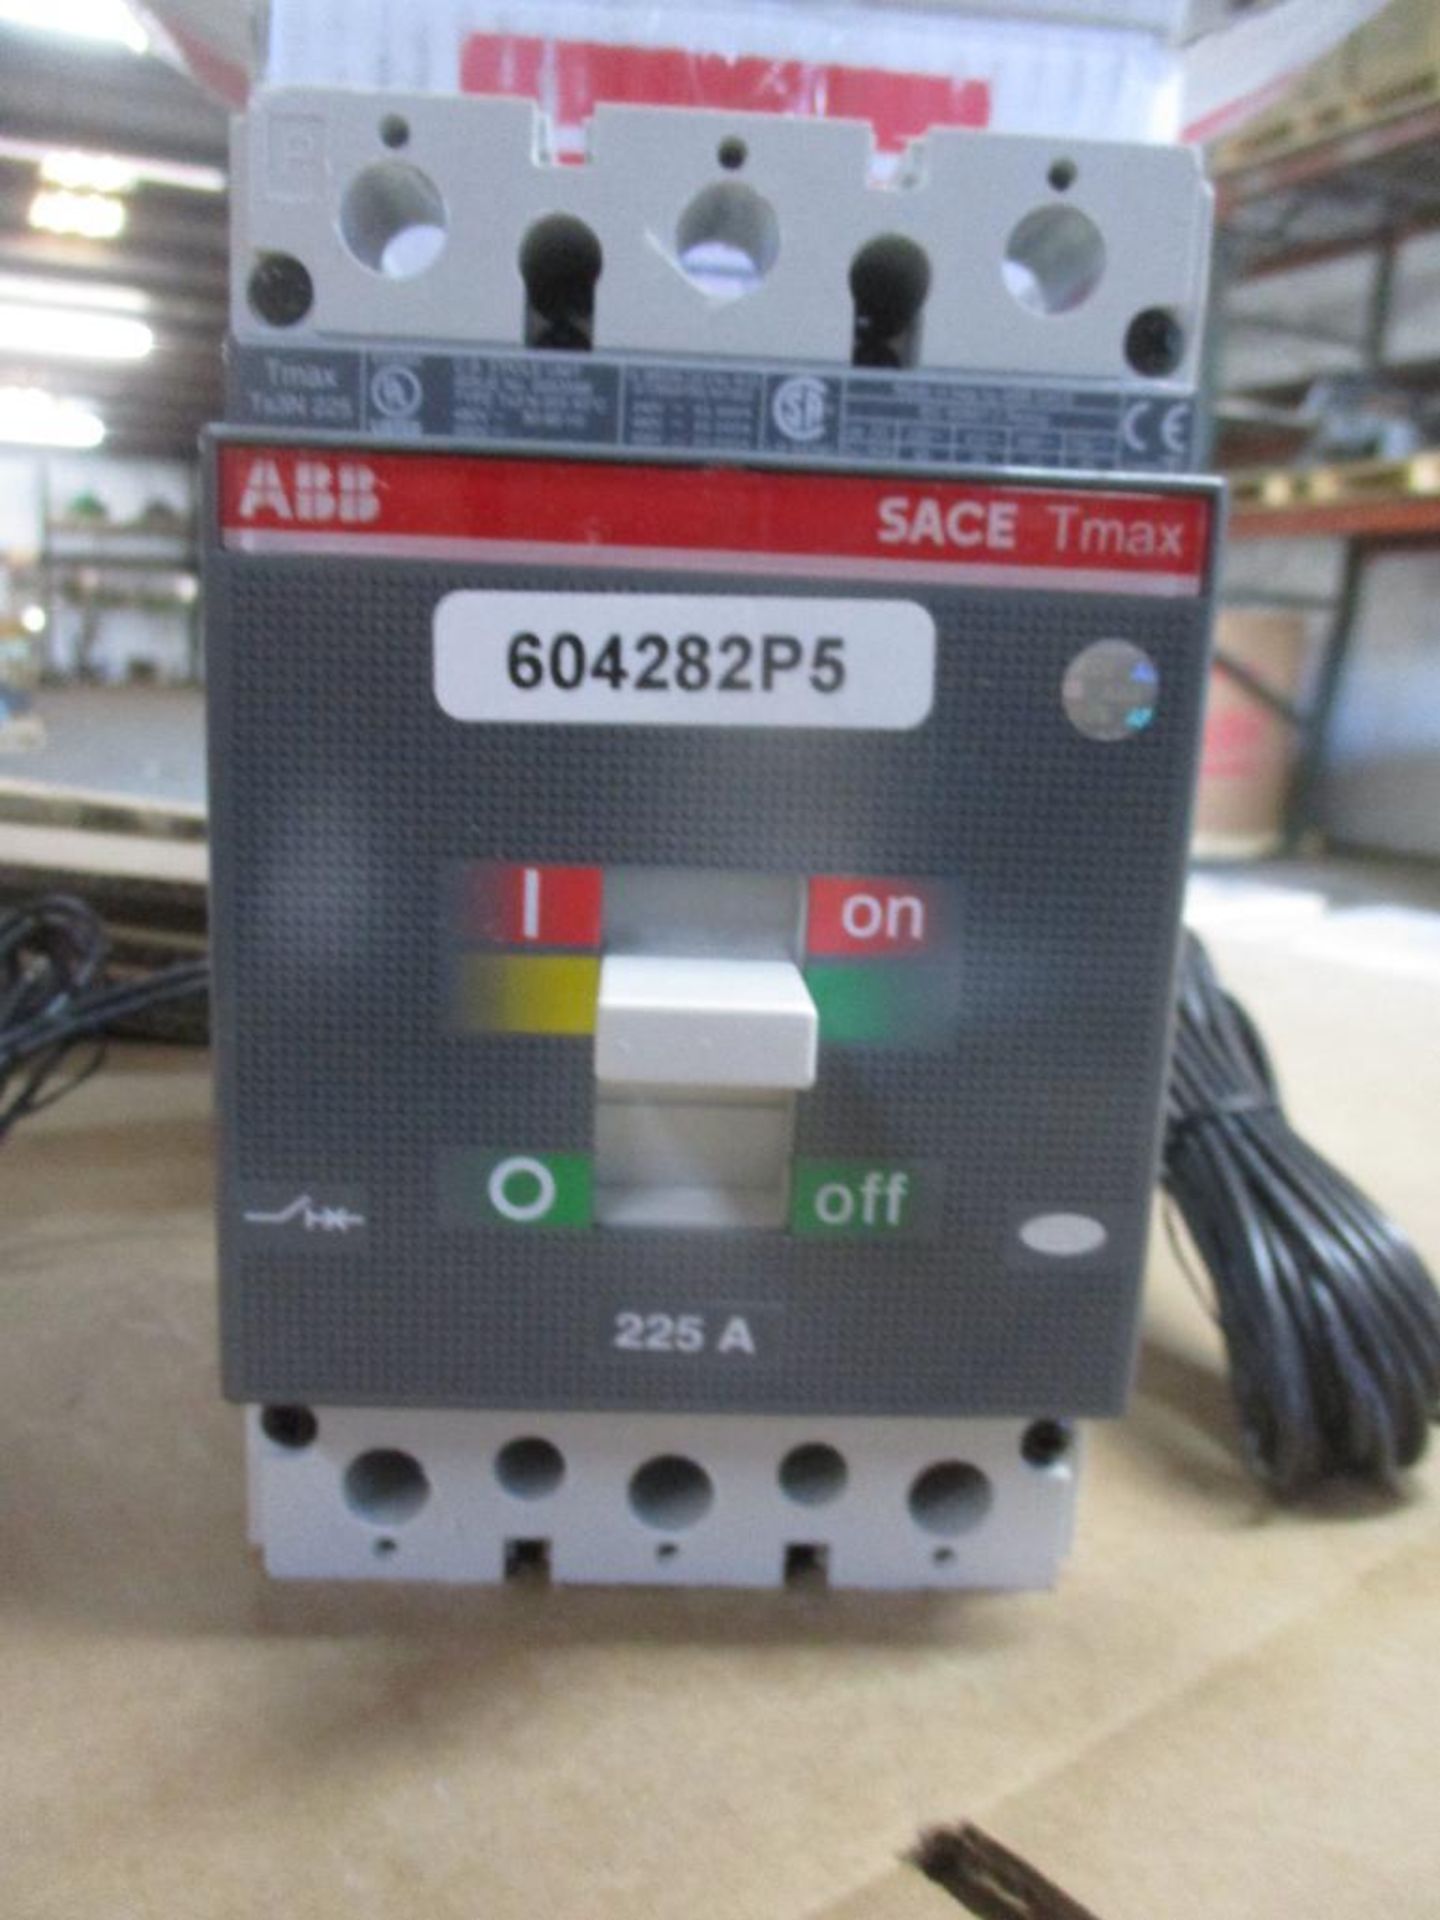 ABB 225 AMP Circuit Breaker, SACE TMAX TS3 N 225, 3-Pole (New in Box)